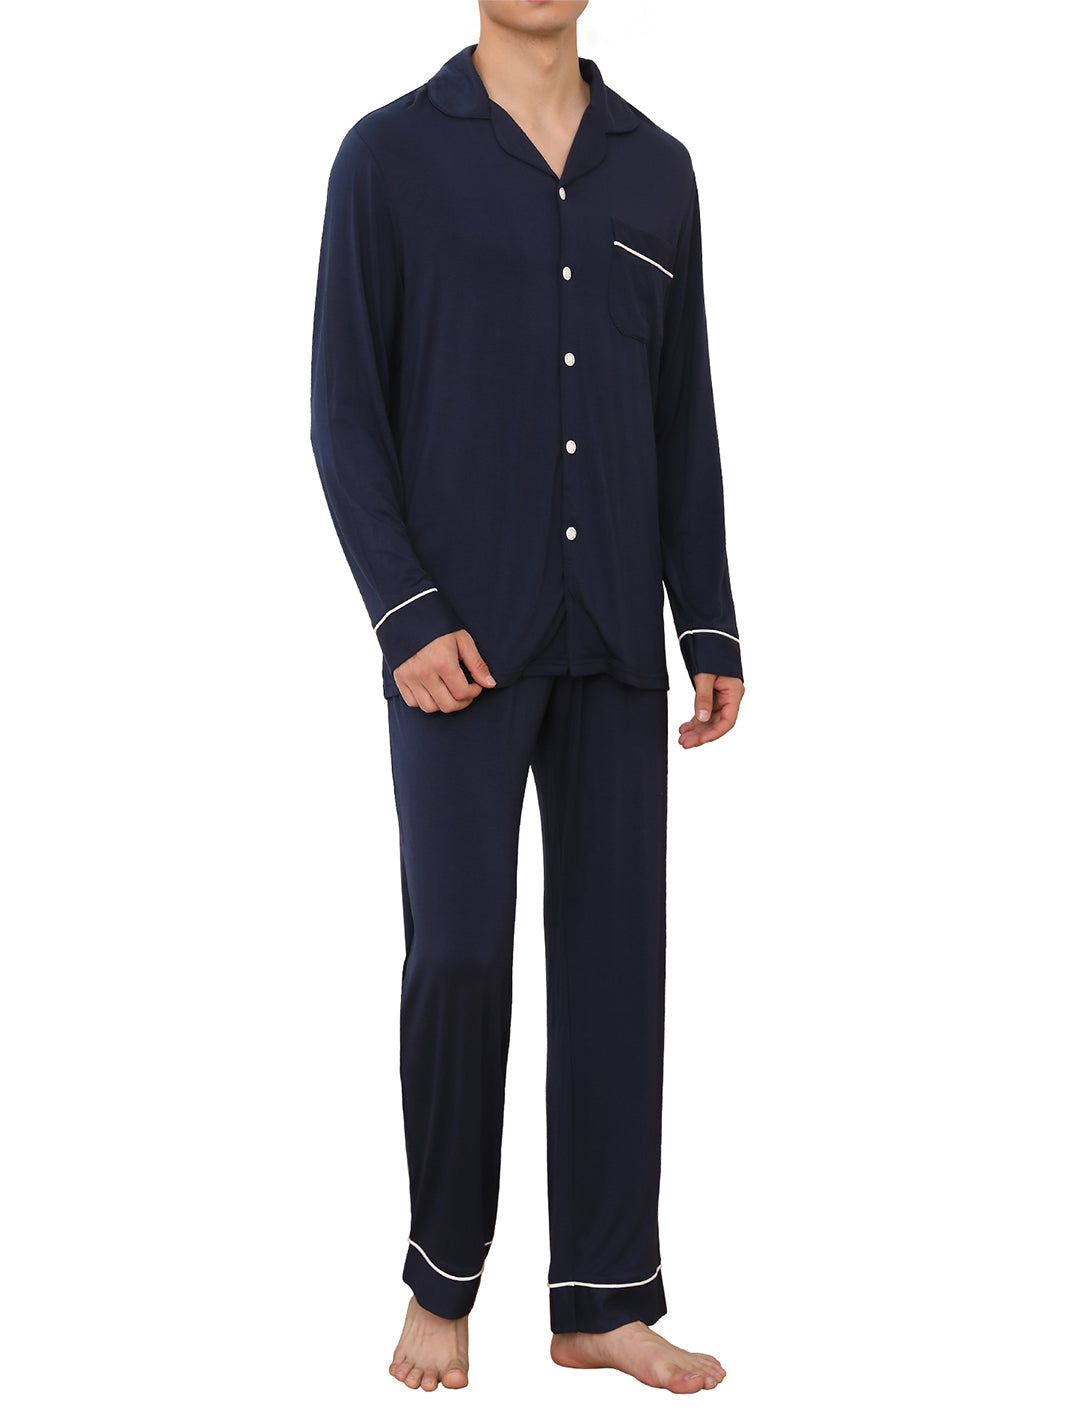 Men's Pajamas Sleepwear Button Up Set